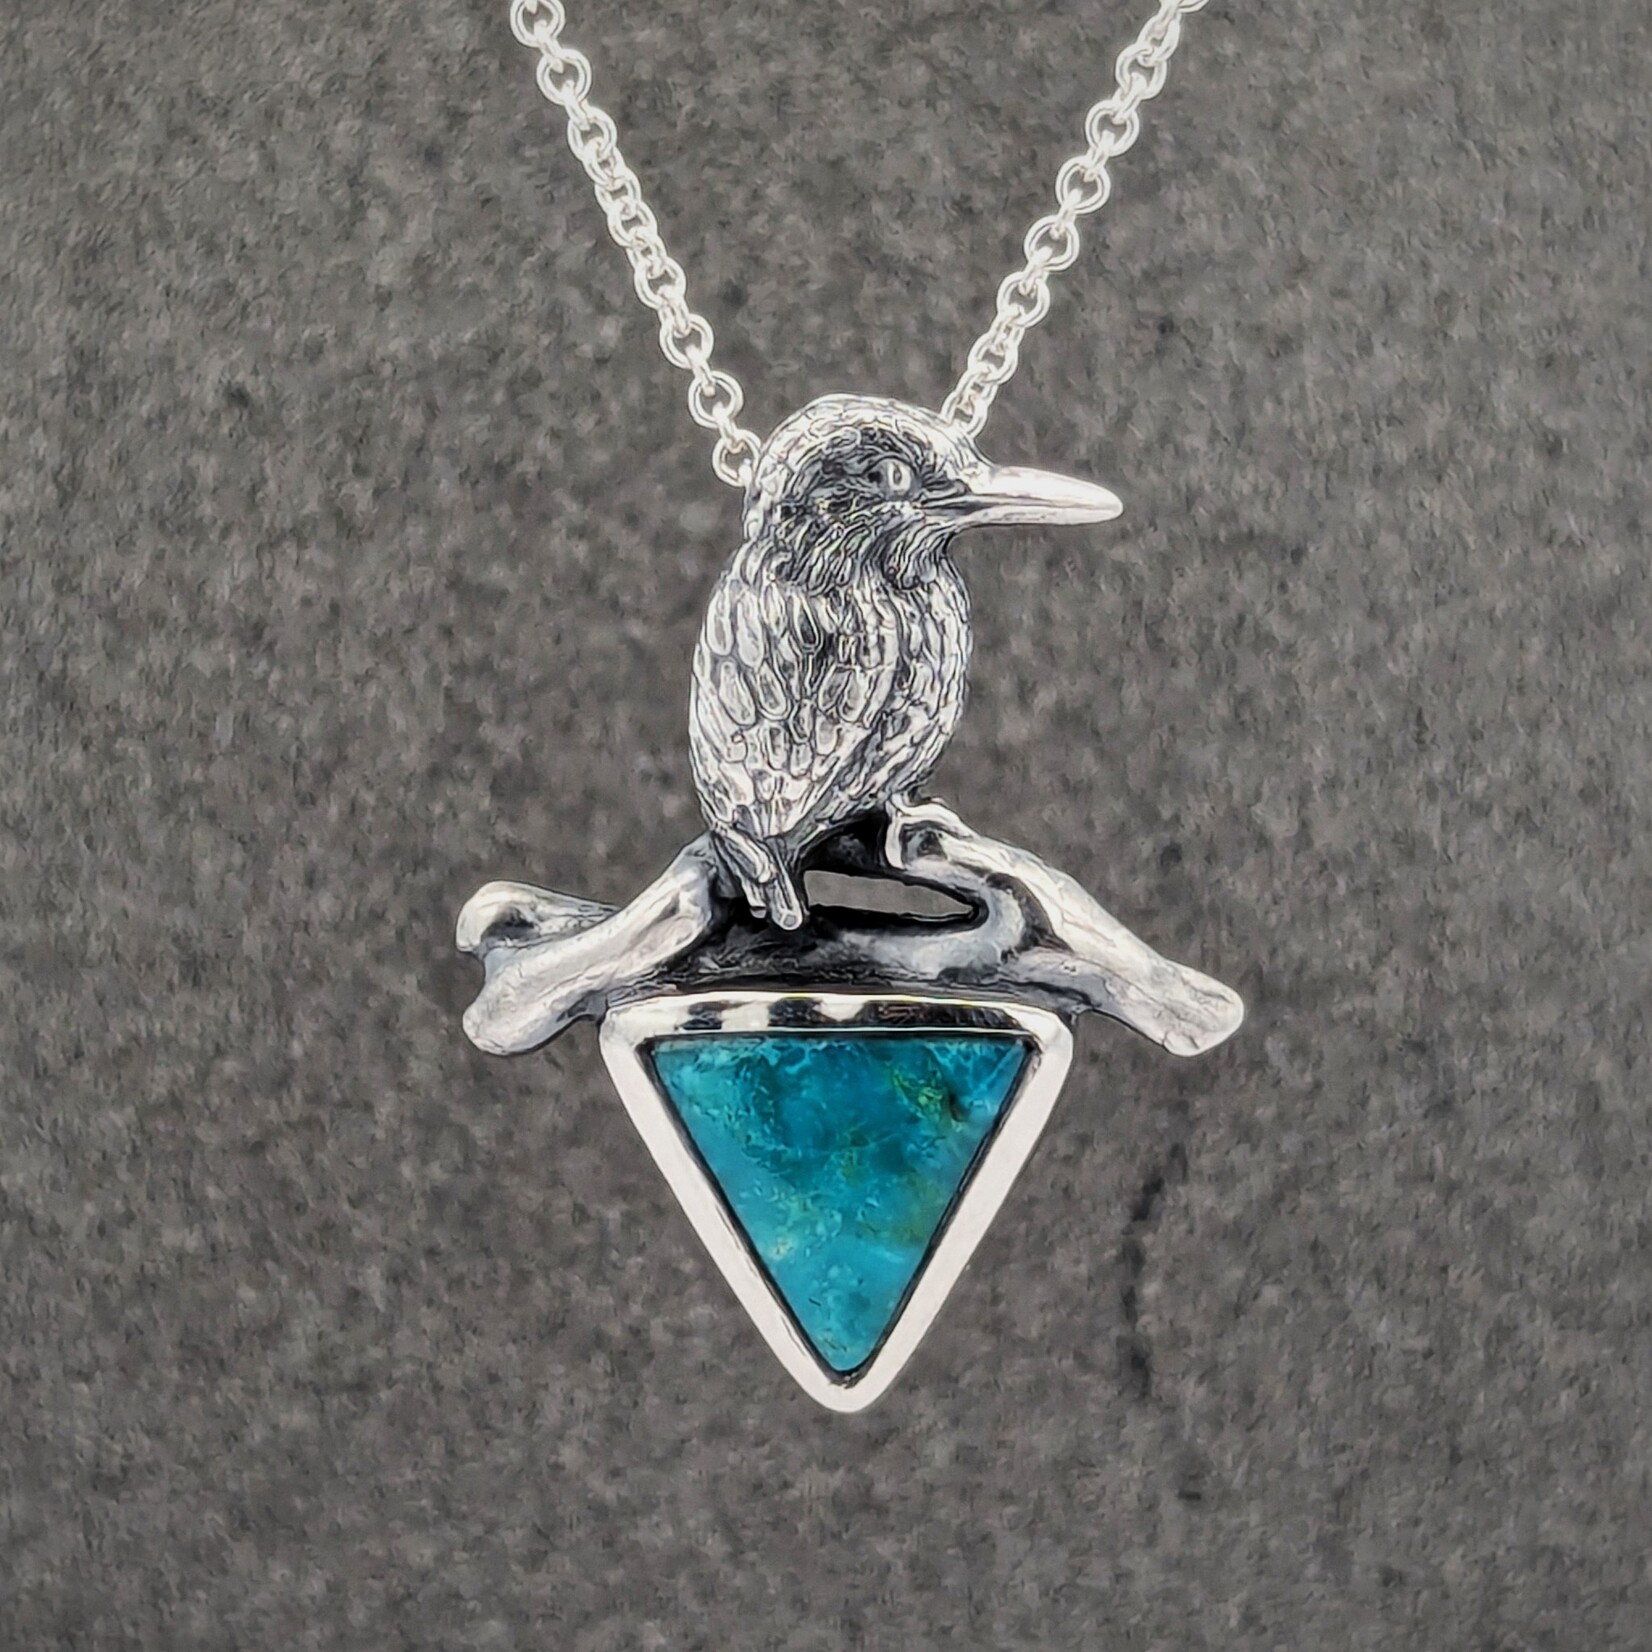 Carrie Nunes Jewelry Kingfisher Pendant